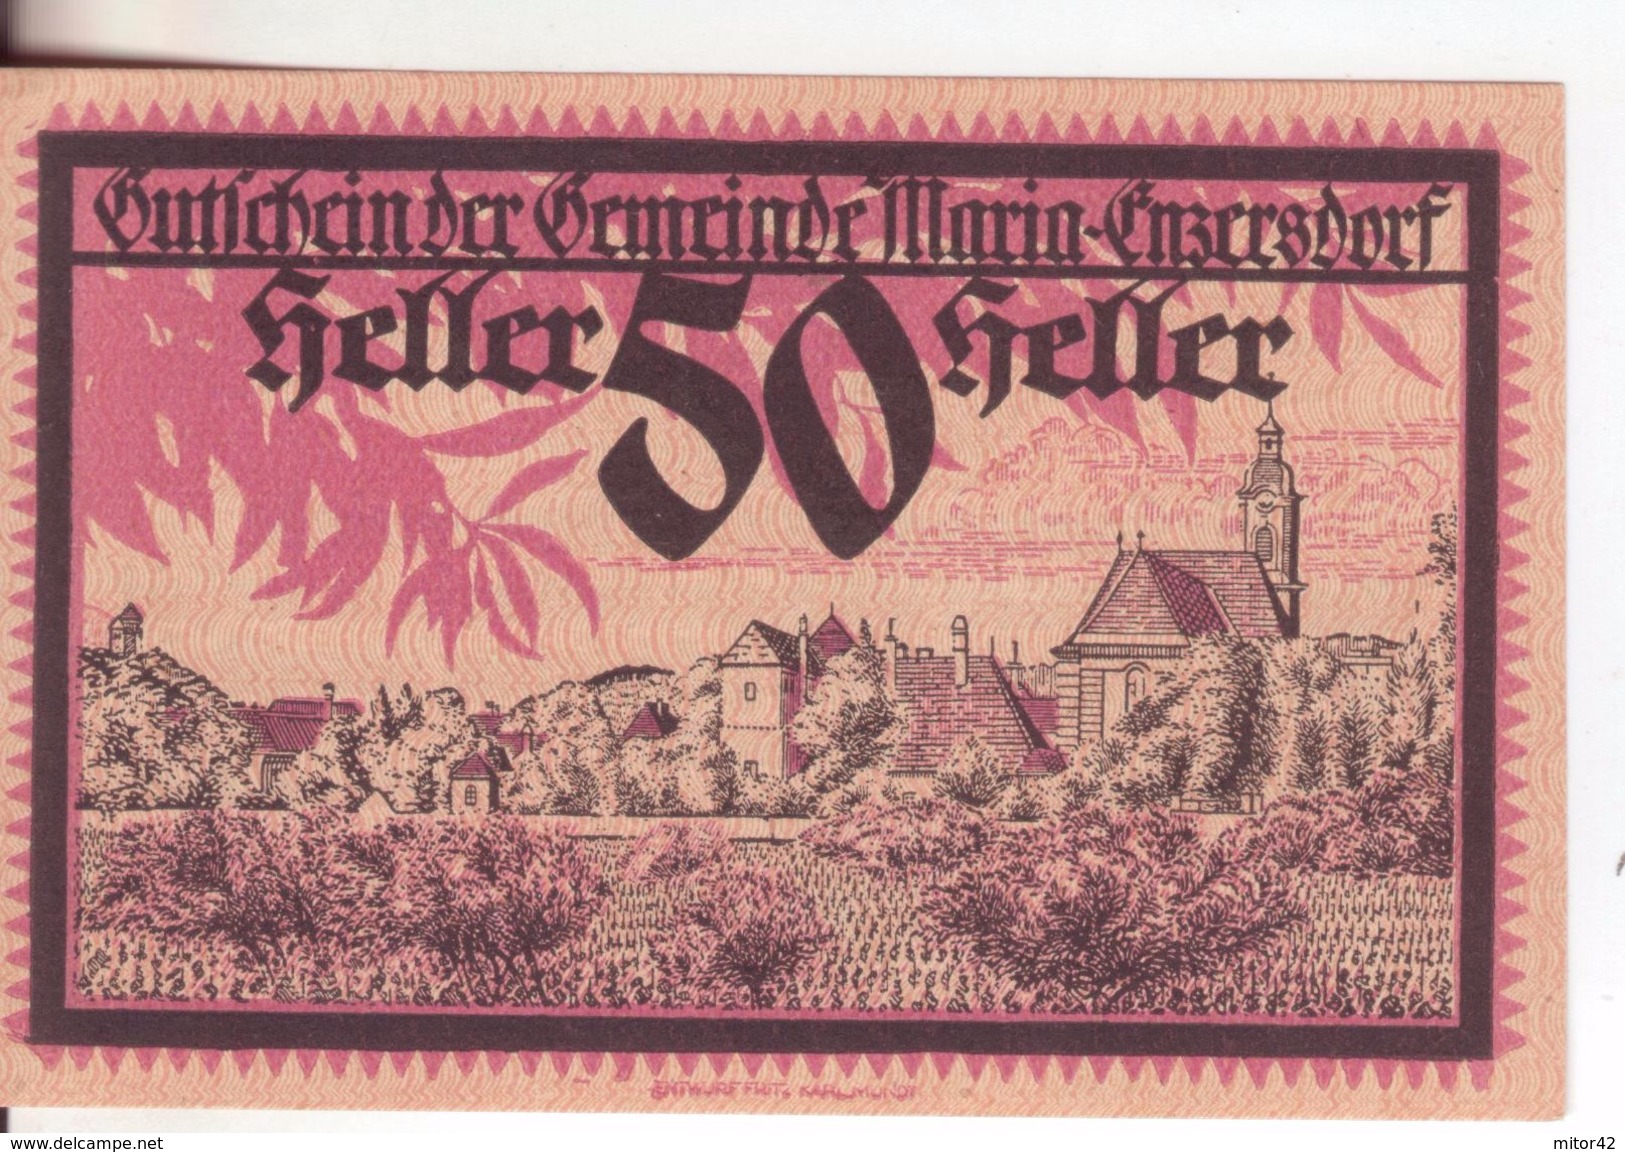 301-Banconote-Carta Moneta Di Emergenza-NOTGELD-Austria-Osterraich-Emergency Money-50 Heller-rosso-1920. - Autriche